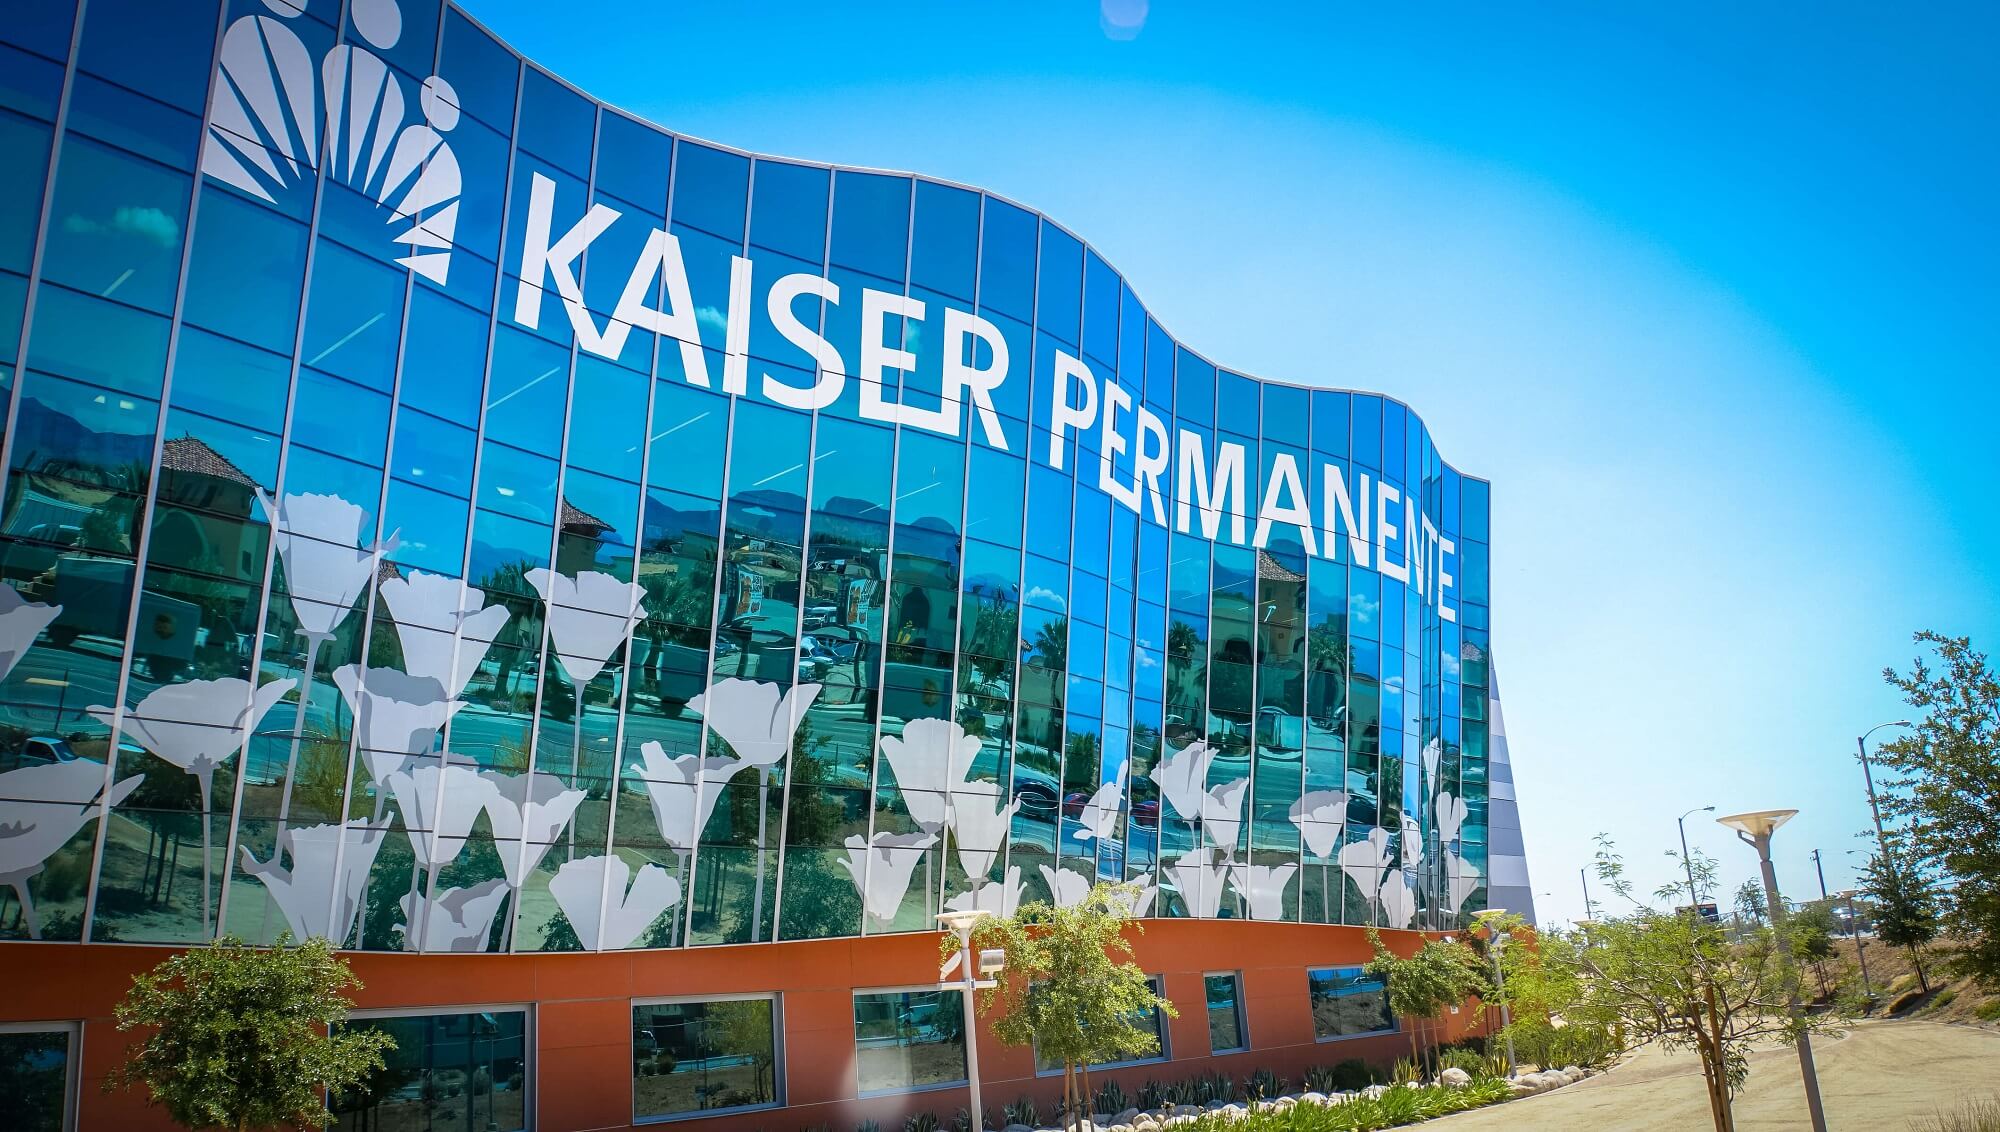 Kaiser kaiser permanente changing healthcare environment 2016